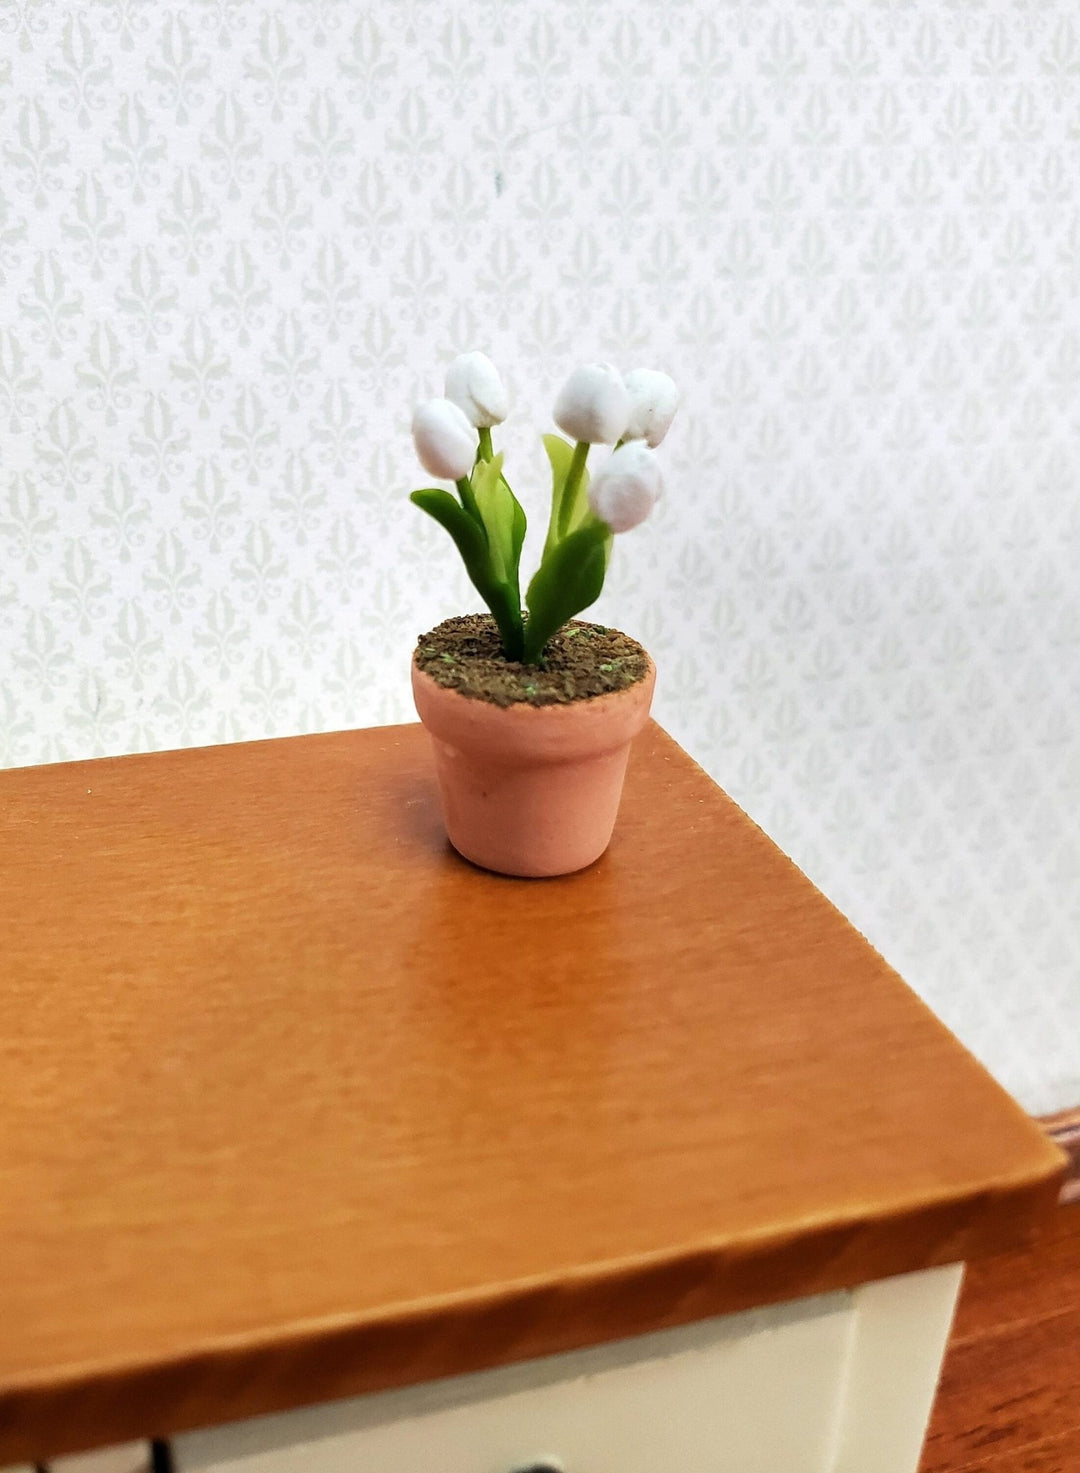 Dollhouse White Tulips in a Terra Cotta Planter Pot 1:12 Scale Miniature Plant - Miniature Crush